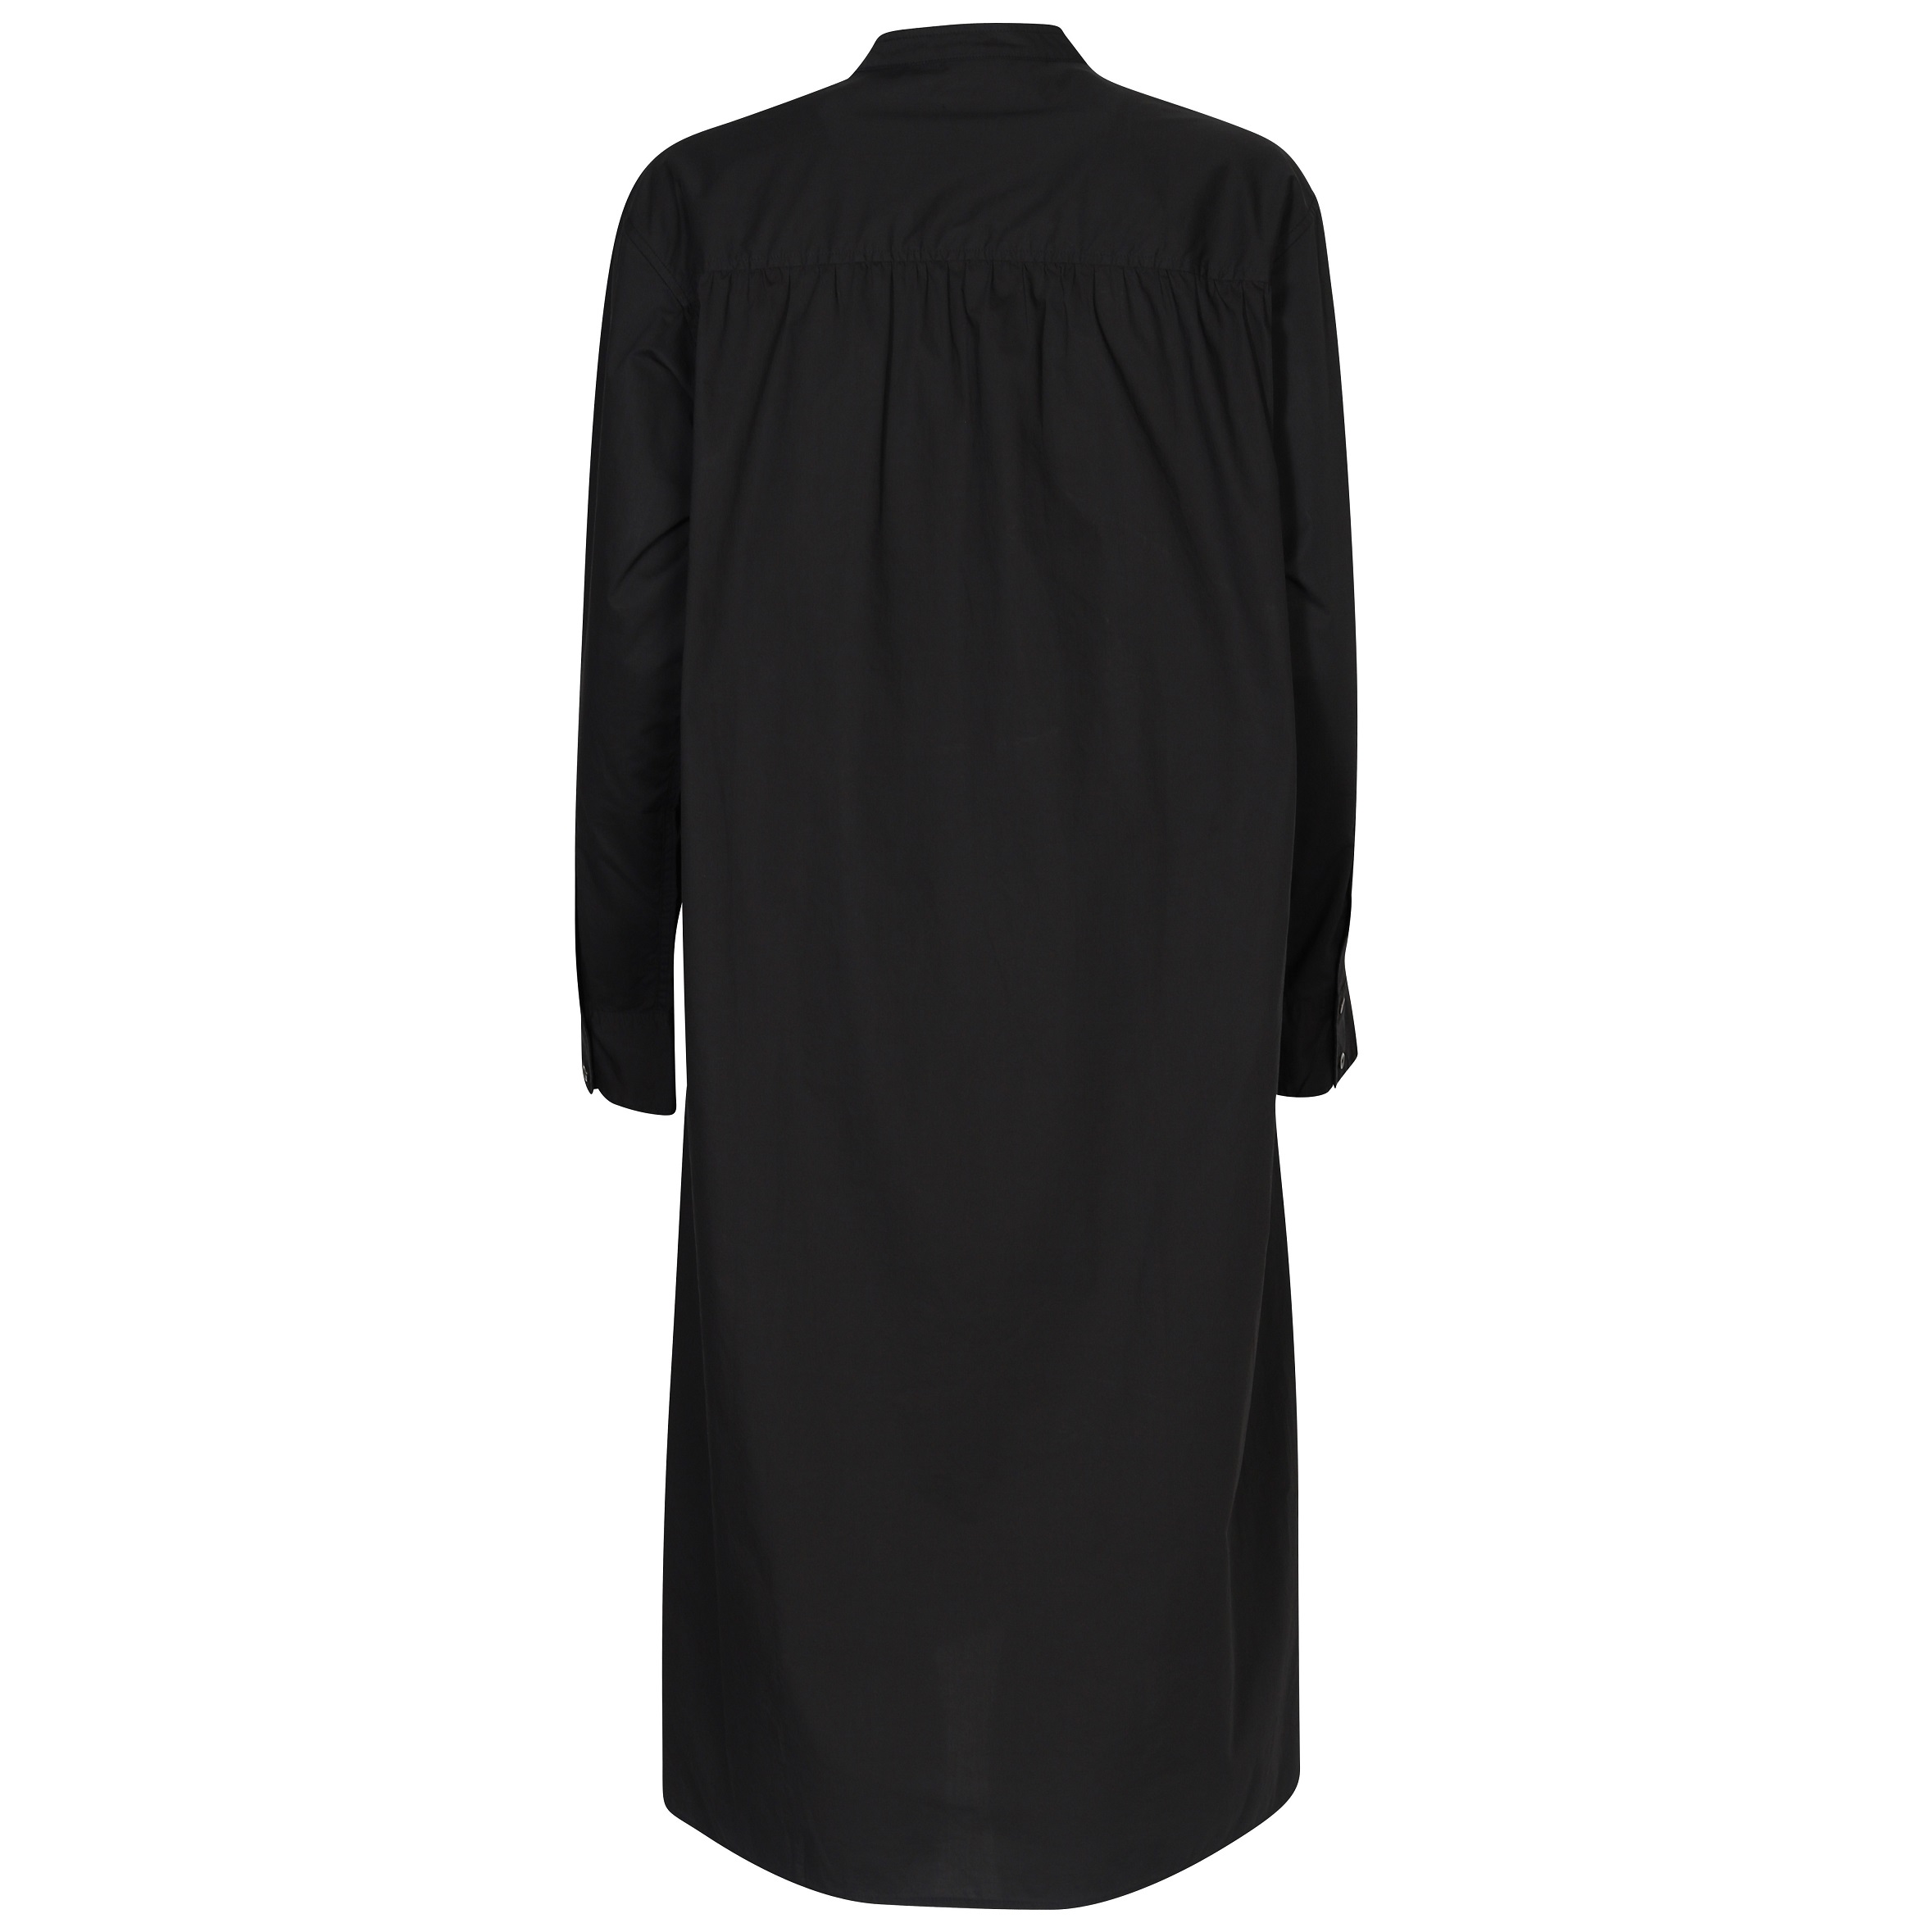 6397 Tuxedo Shirt Dress in Black M